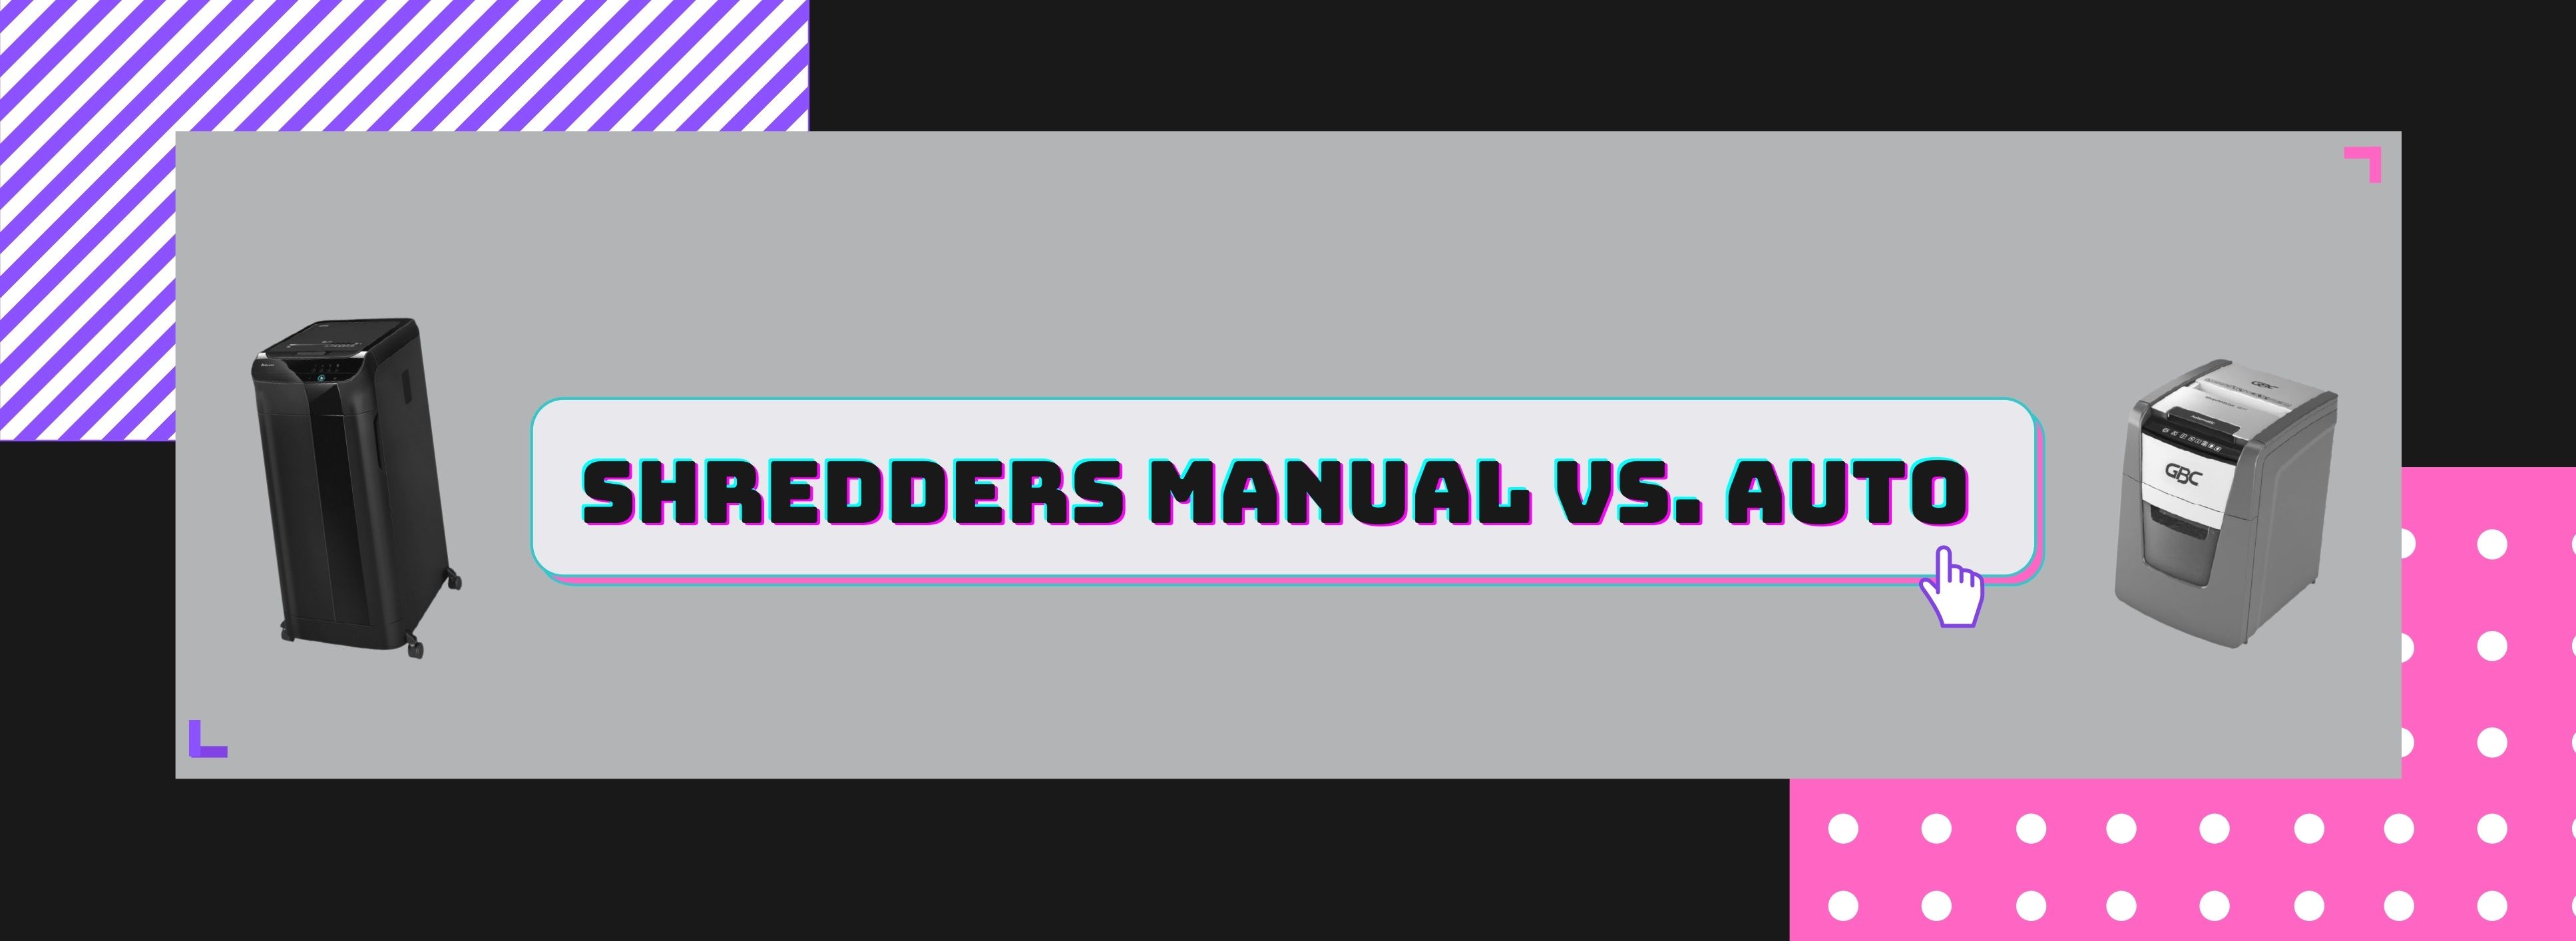 Shredders Manual vs. Auto